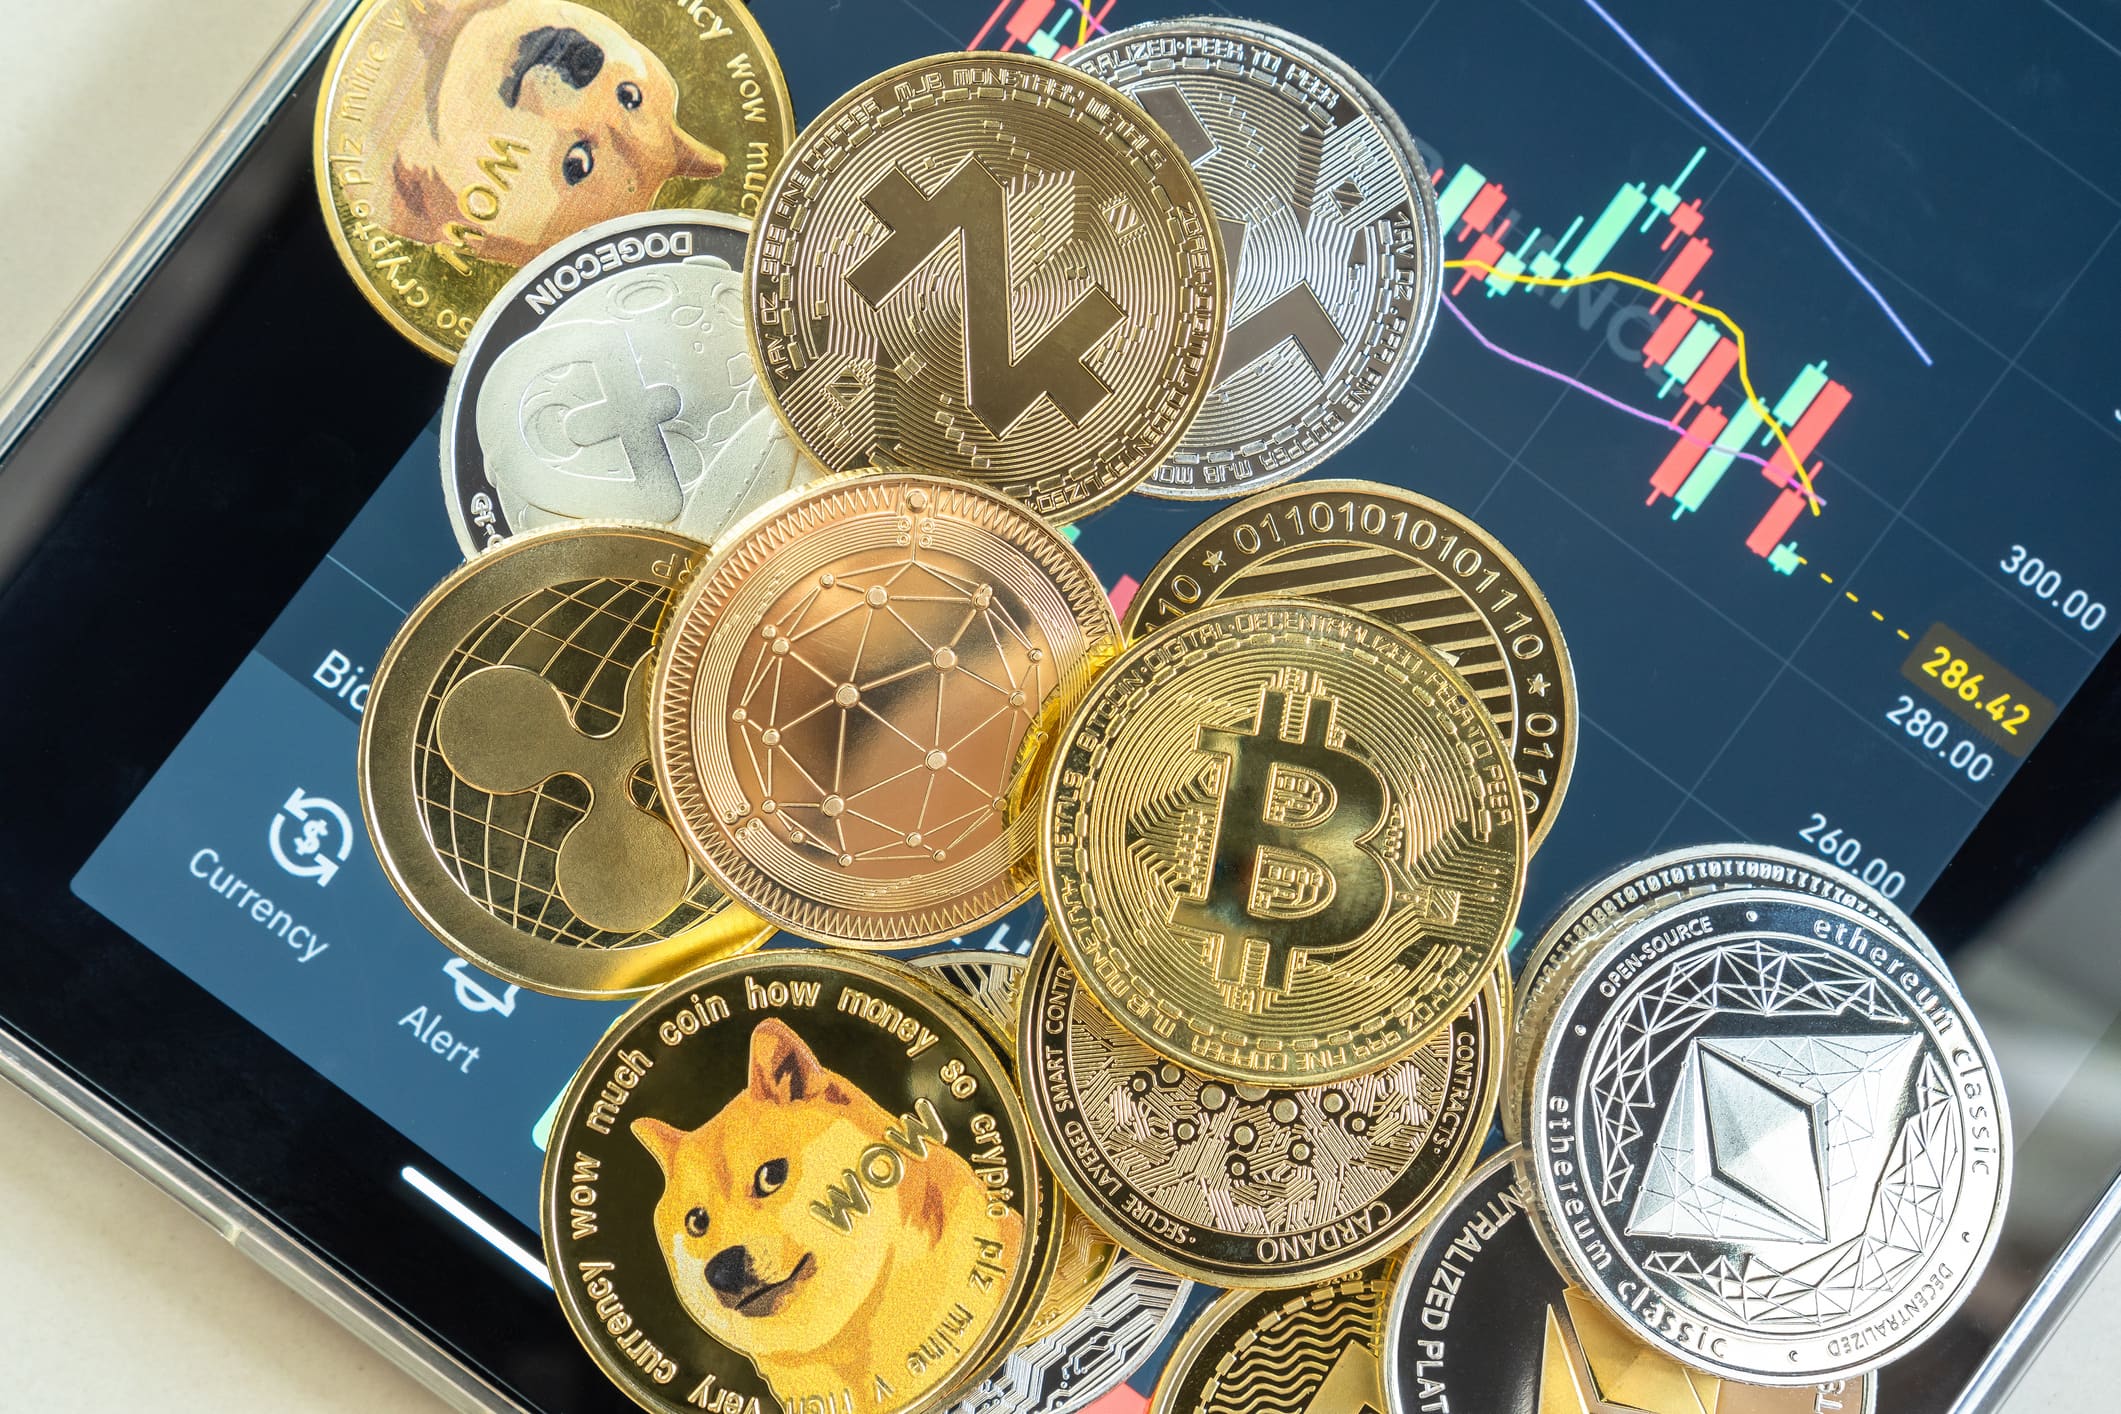 CryptoNight Lite - hashrate, miners, coins, pools - BitcoinWiki